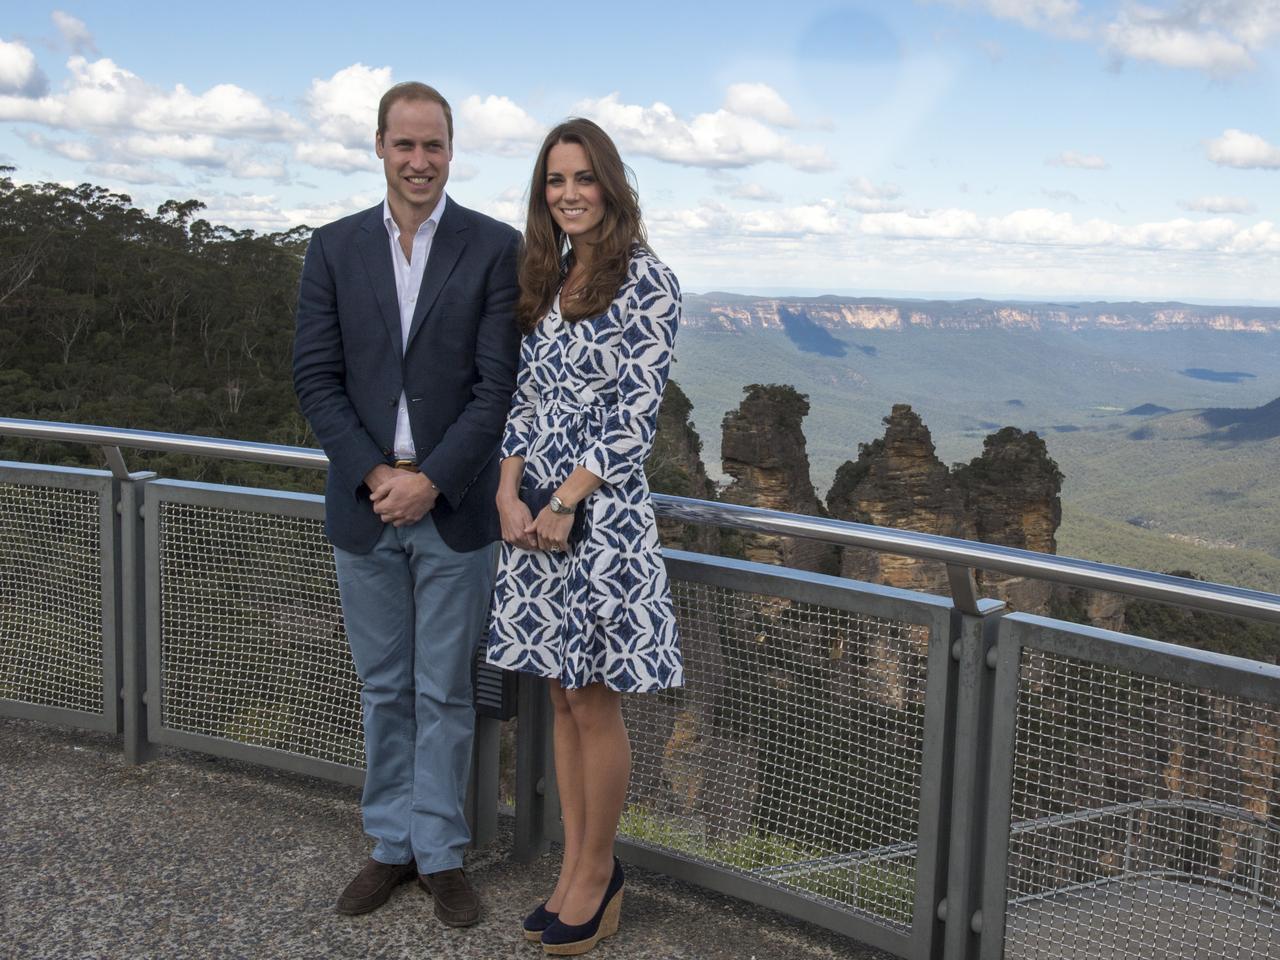 The Duke And Duchess Of Cambridge Tour Australia And New Zealand - Day 11